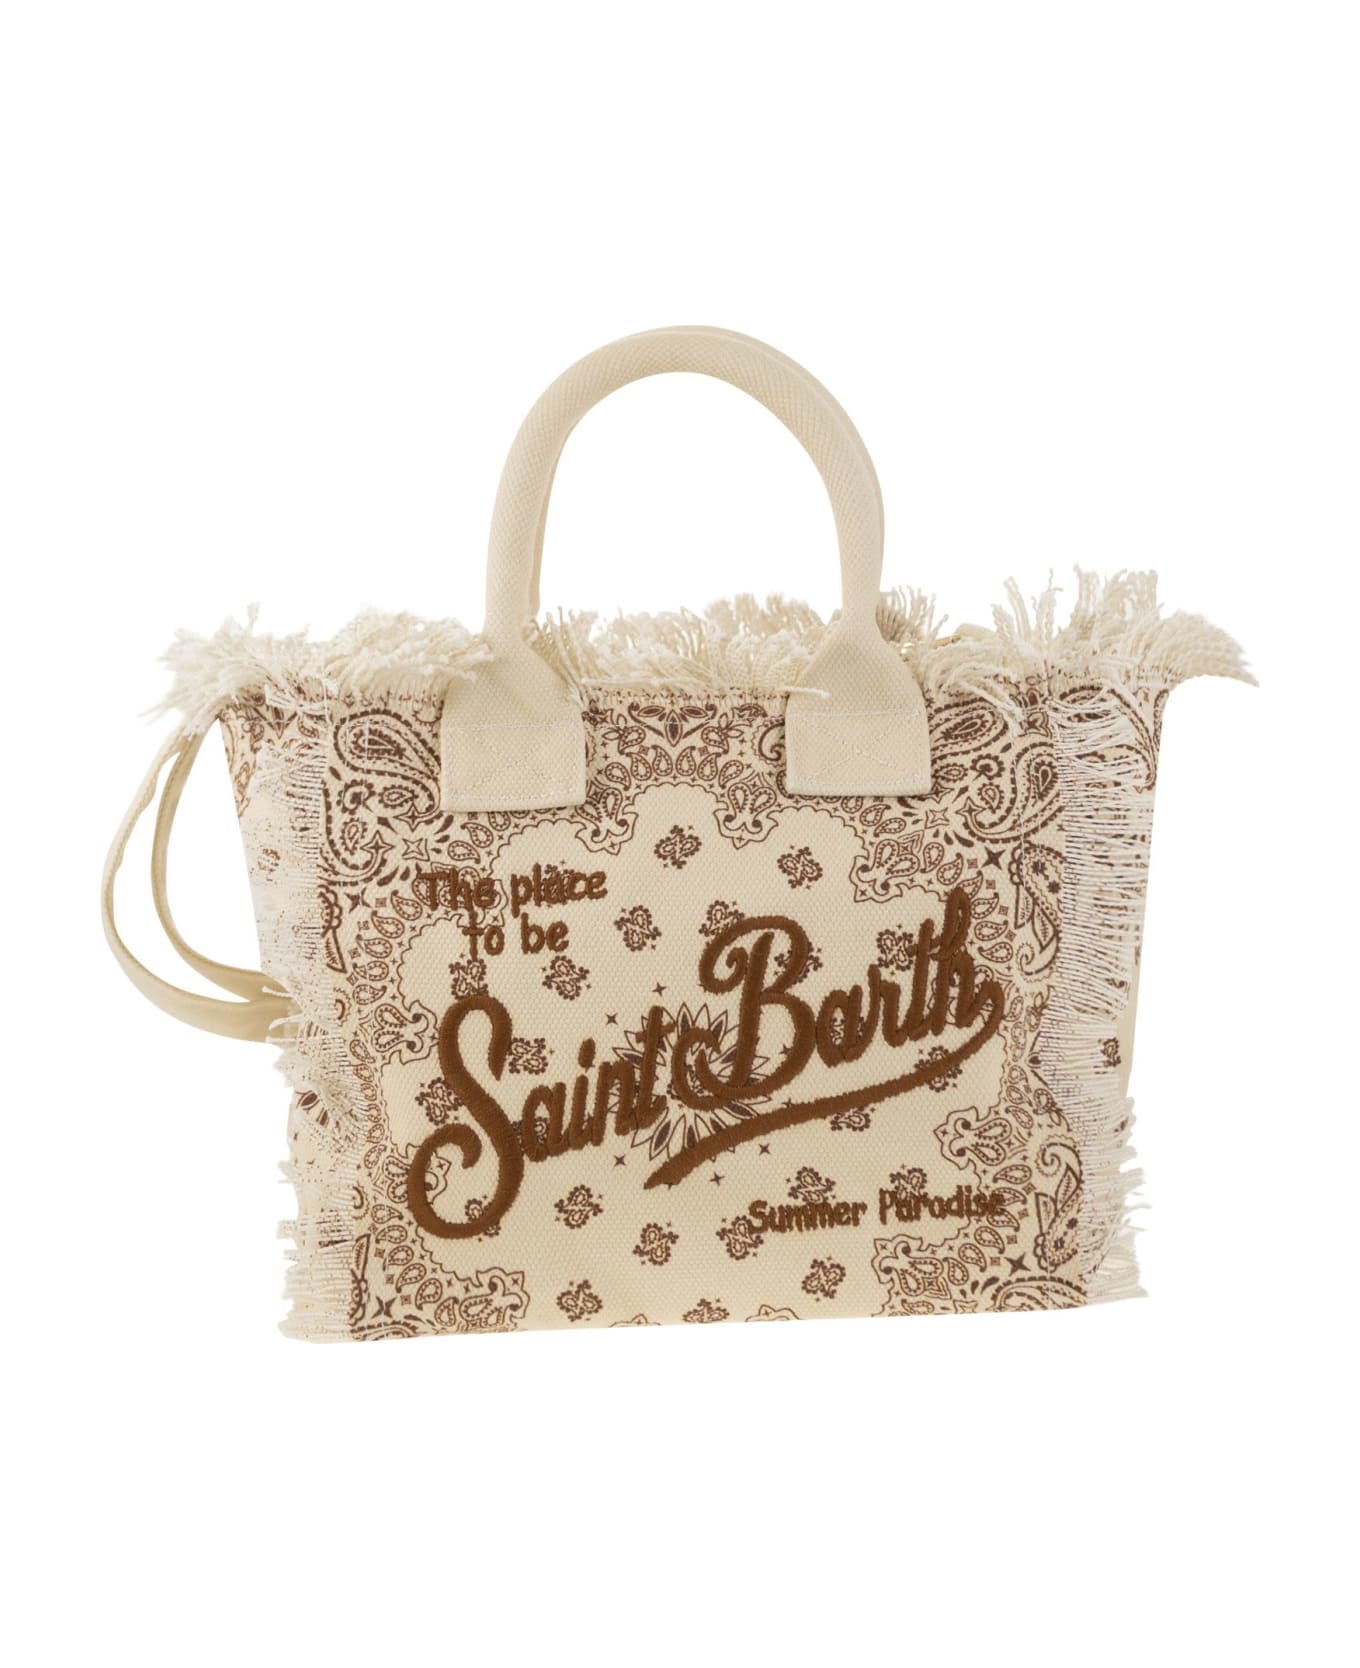 MC2 Saint Barth Colette - Bandana Patterned Handbag - Beige